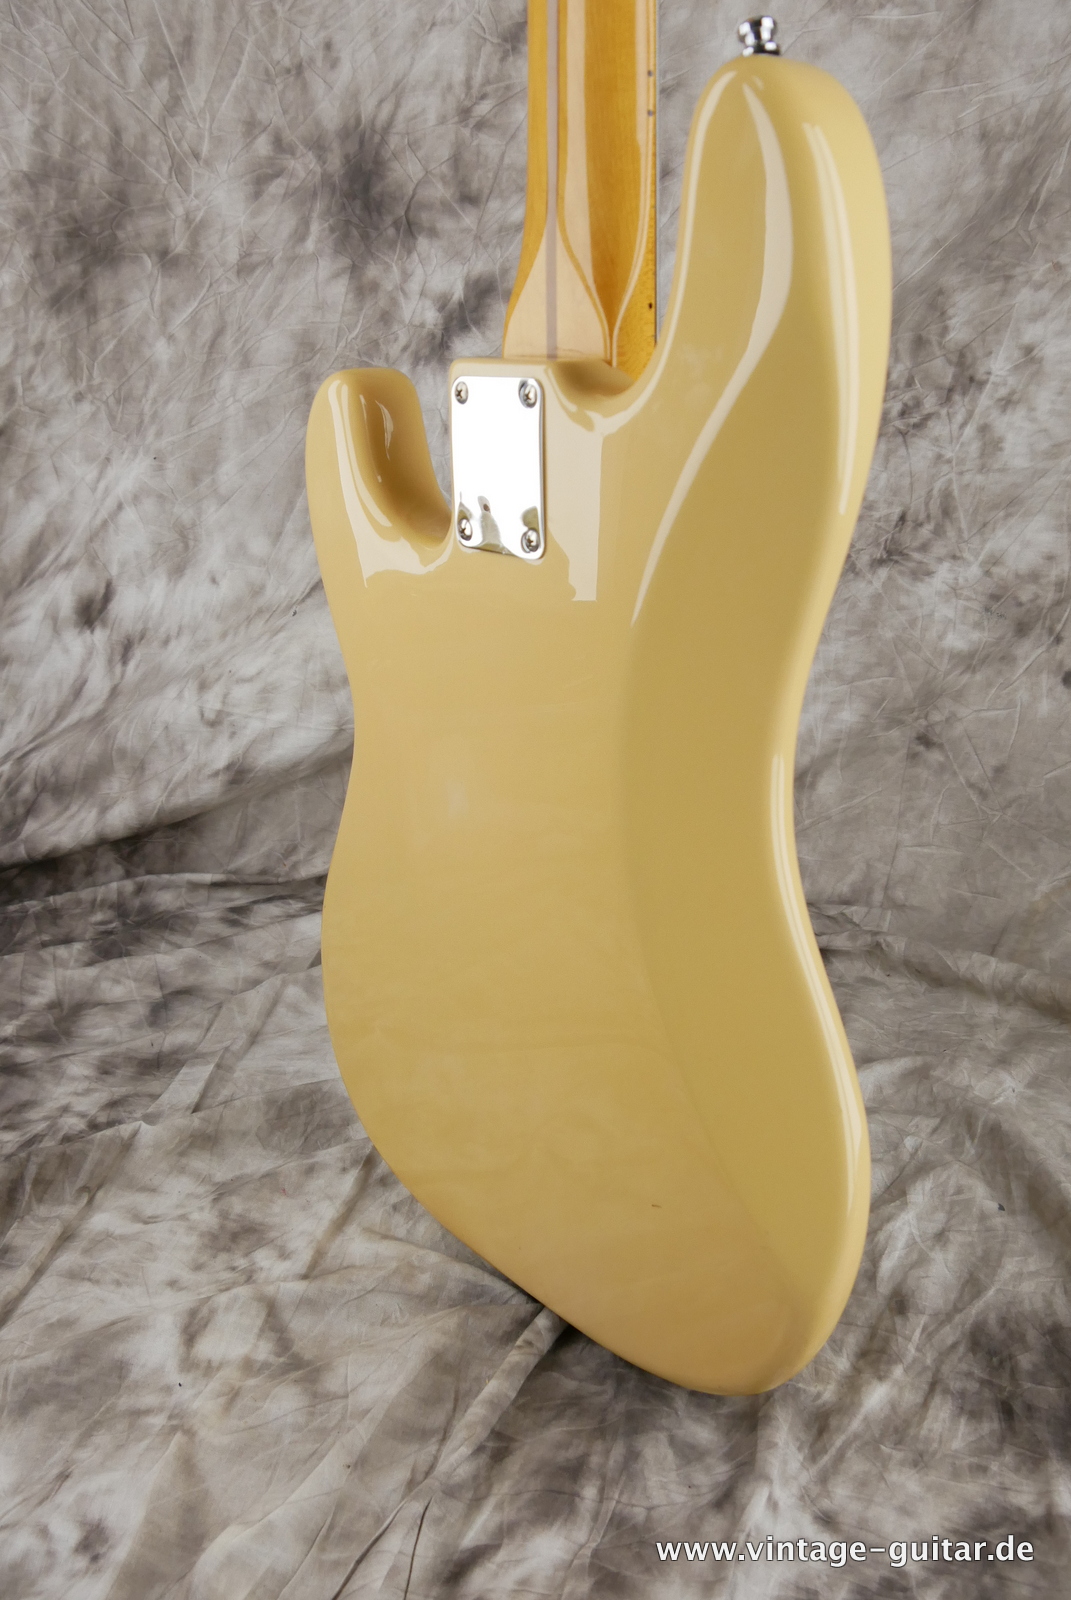 Fender-precision-mexico-2009-beige-008.JPG